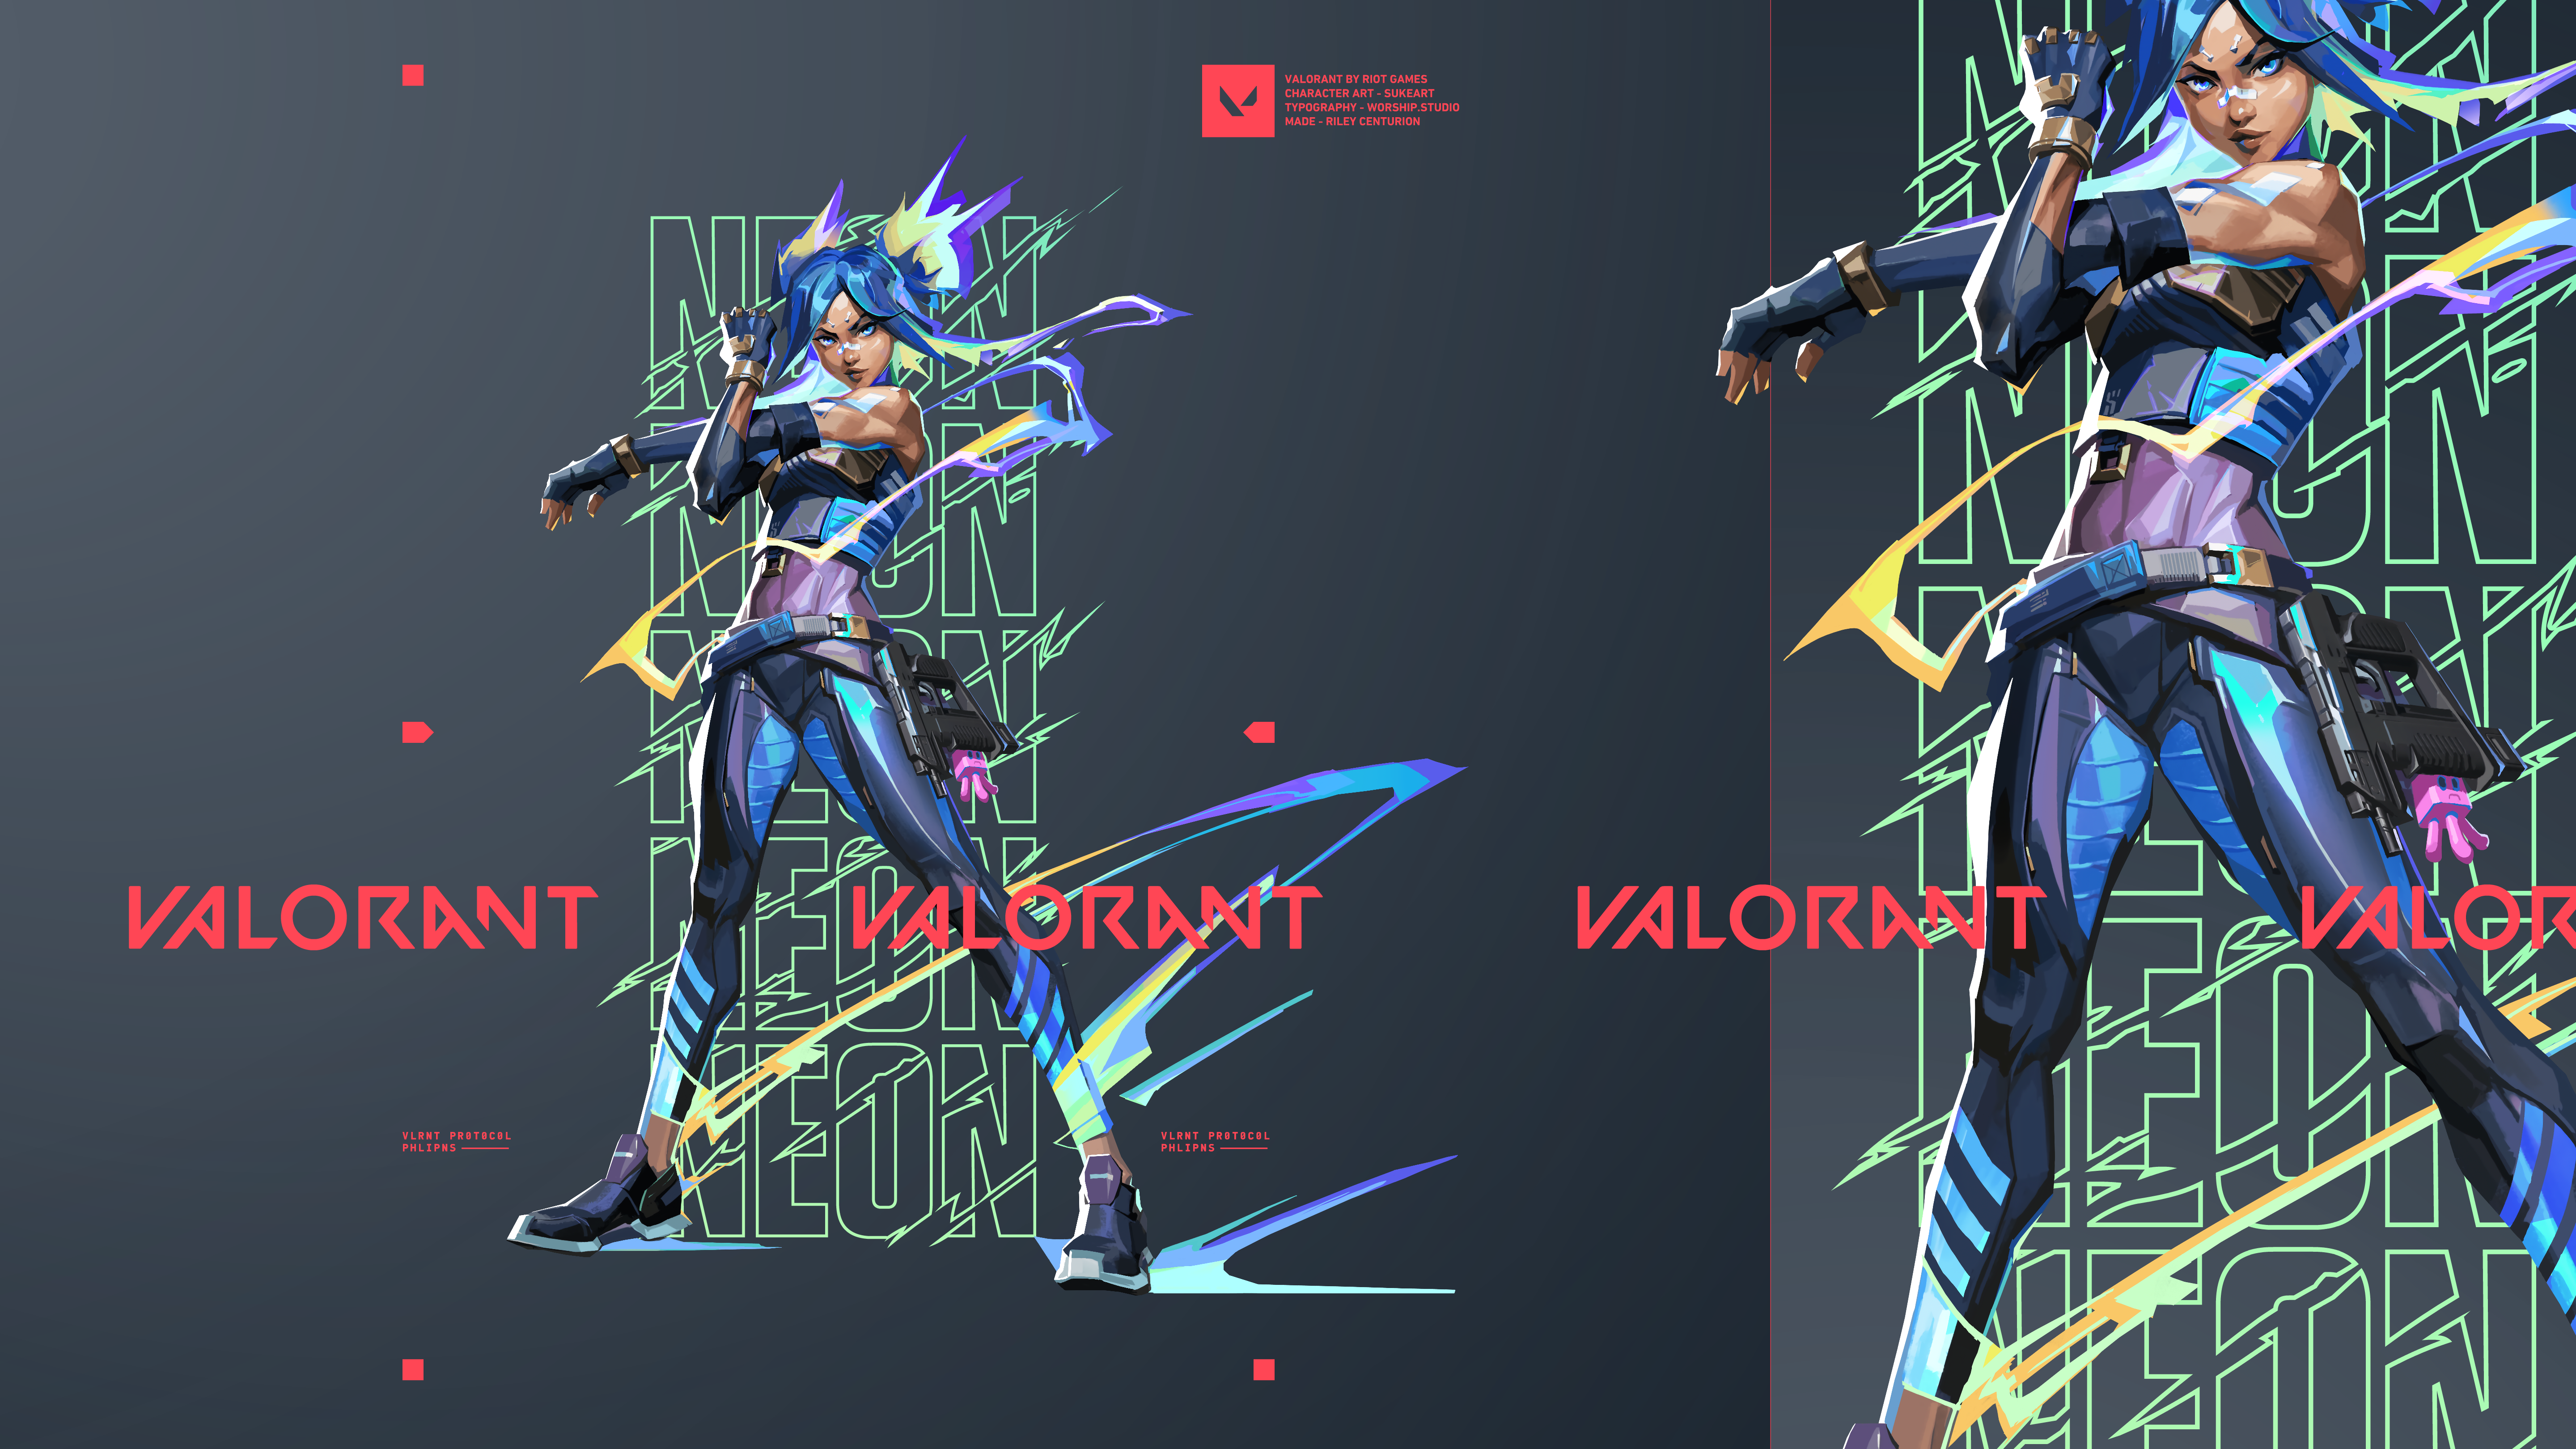 Valorant Neon 4k UHD Wallpapers rVALORANT